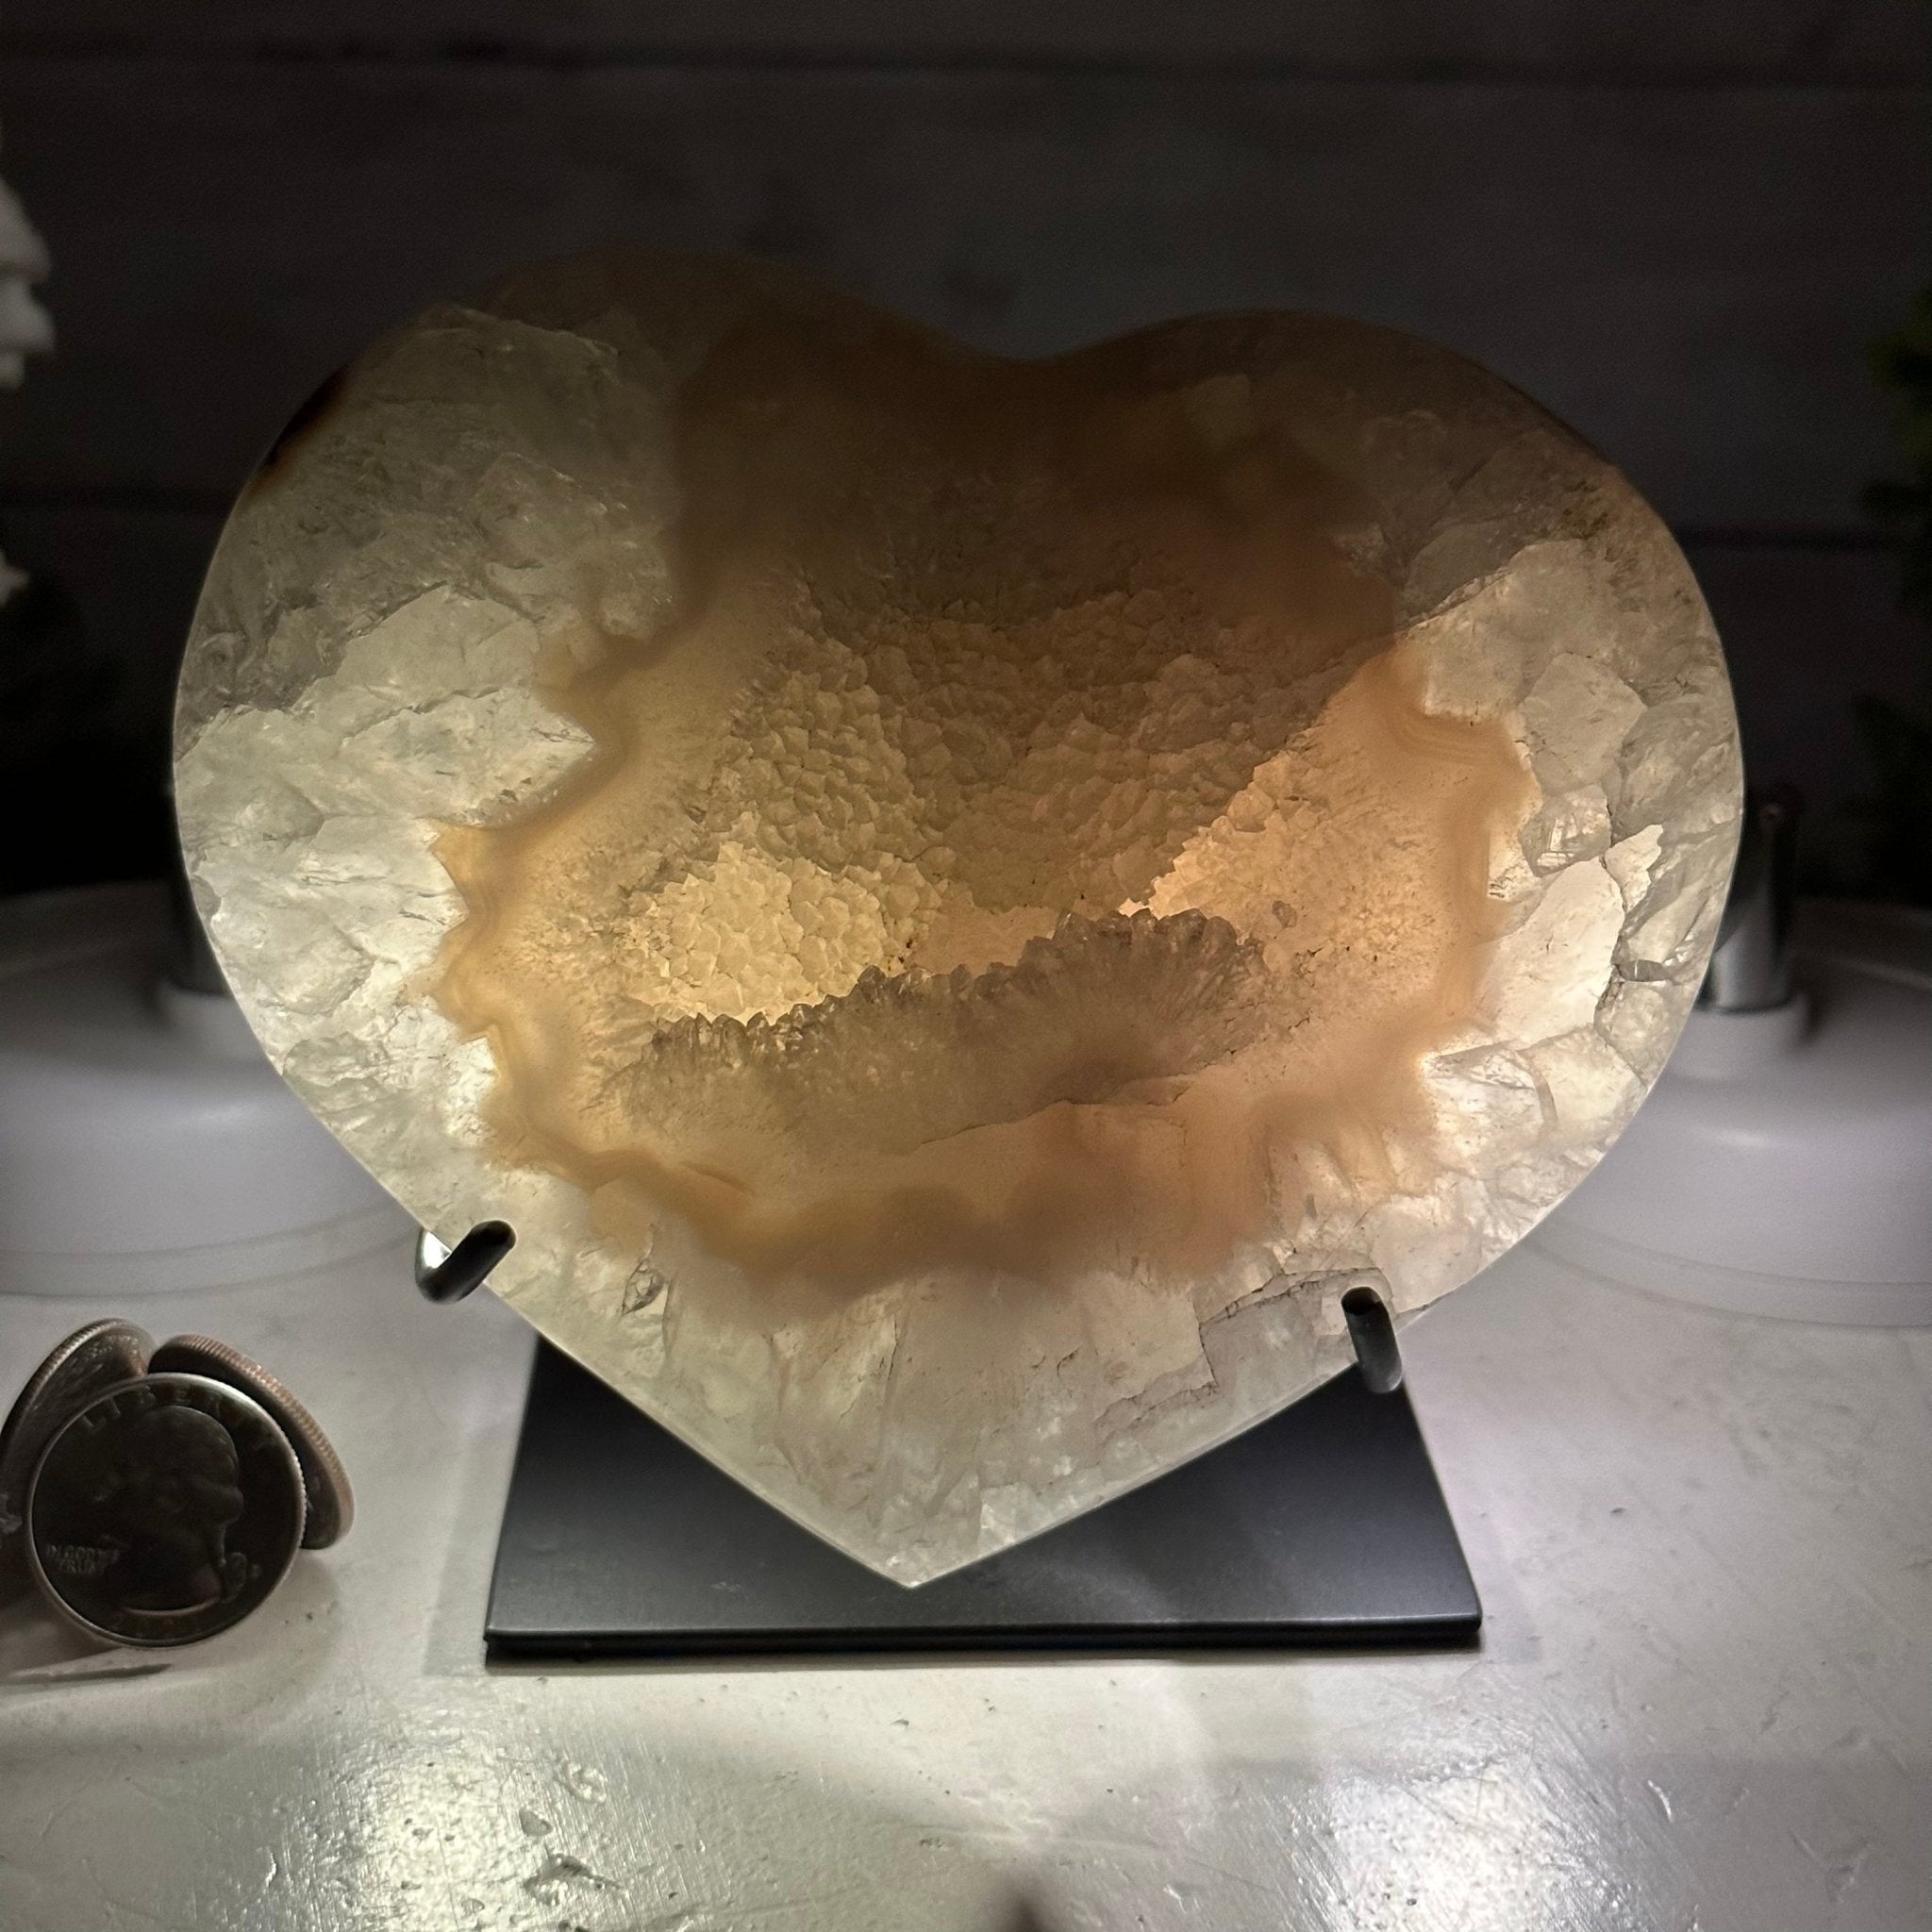 Polished Agate Heart Geode on a Metal Stand, 2.7 lbs & 4.7" Tall, Model #5468-0043 by Brazil Gems - Brazil GemsBrazil GemsPolished Agate Heart Geode on a Metal Stand, 2.7 lbs & 4.7" Tall, Model #5468-0043 by Brazil GemsHearts5468-0043